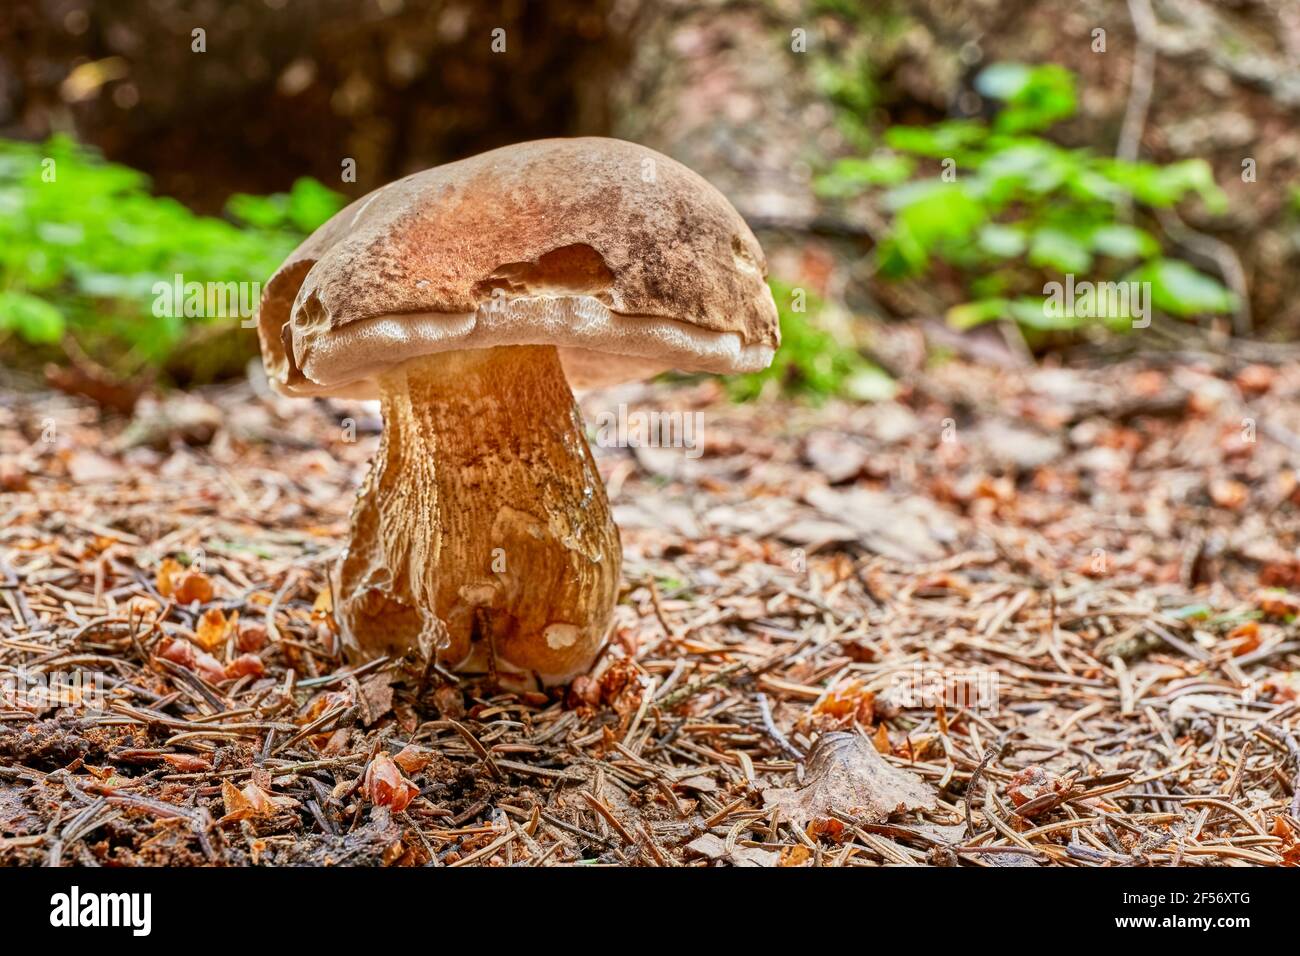 Tylopilus felleus - Mushroom. Fungus in the natural environment. English: bitter bolete, bitter tylopilus Stock Photo